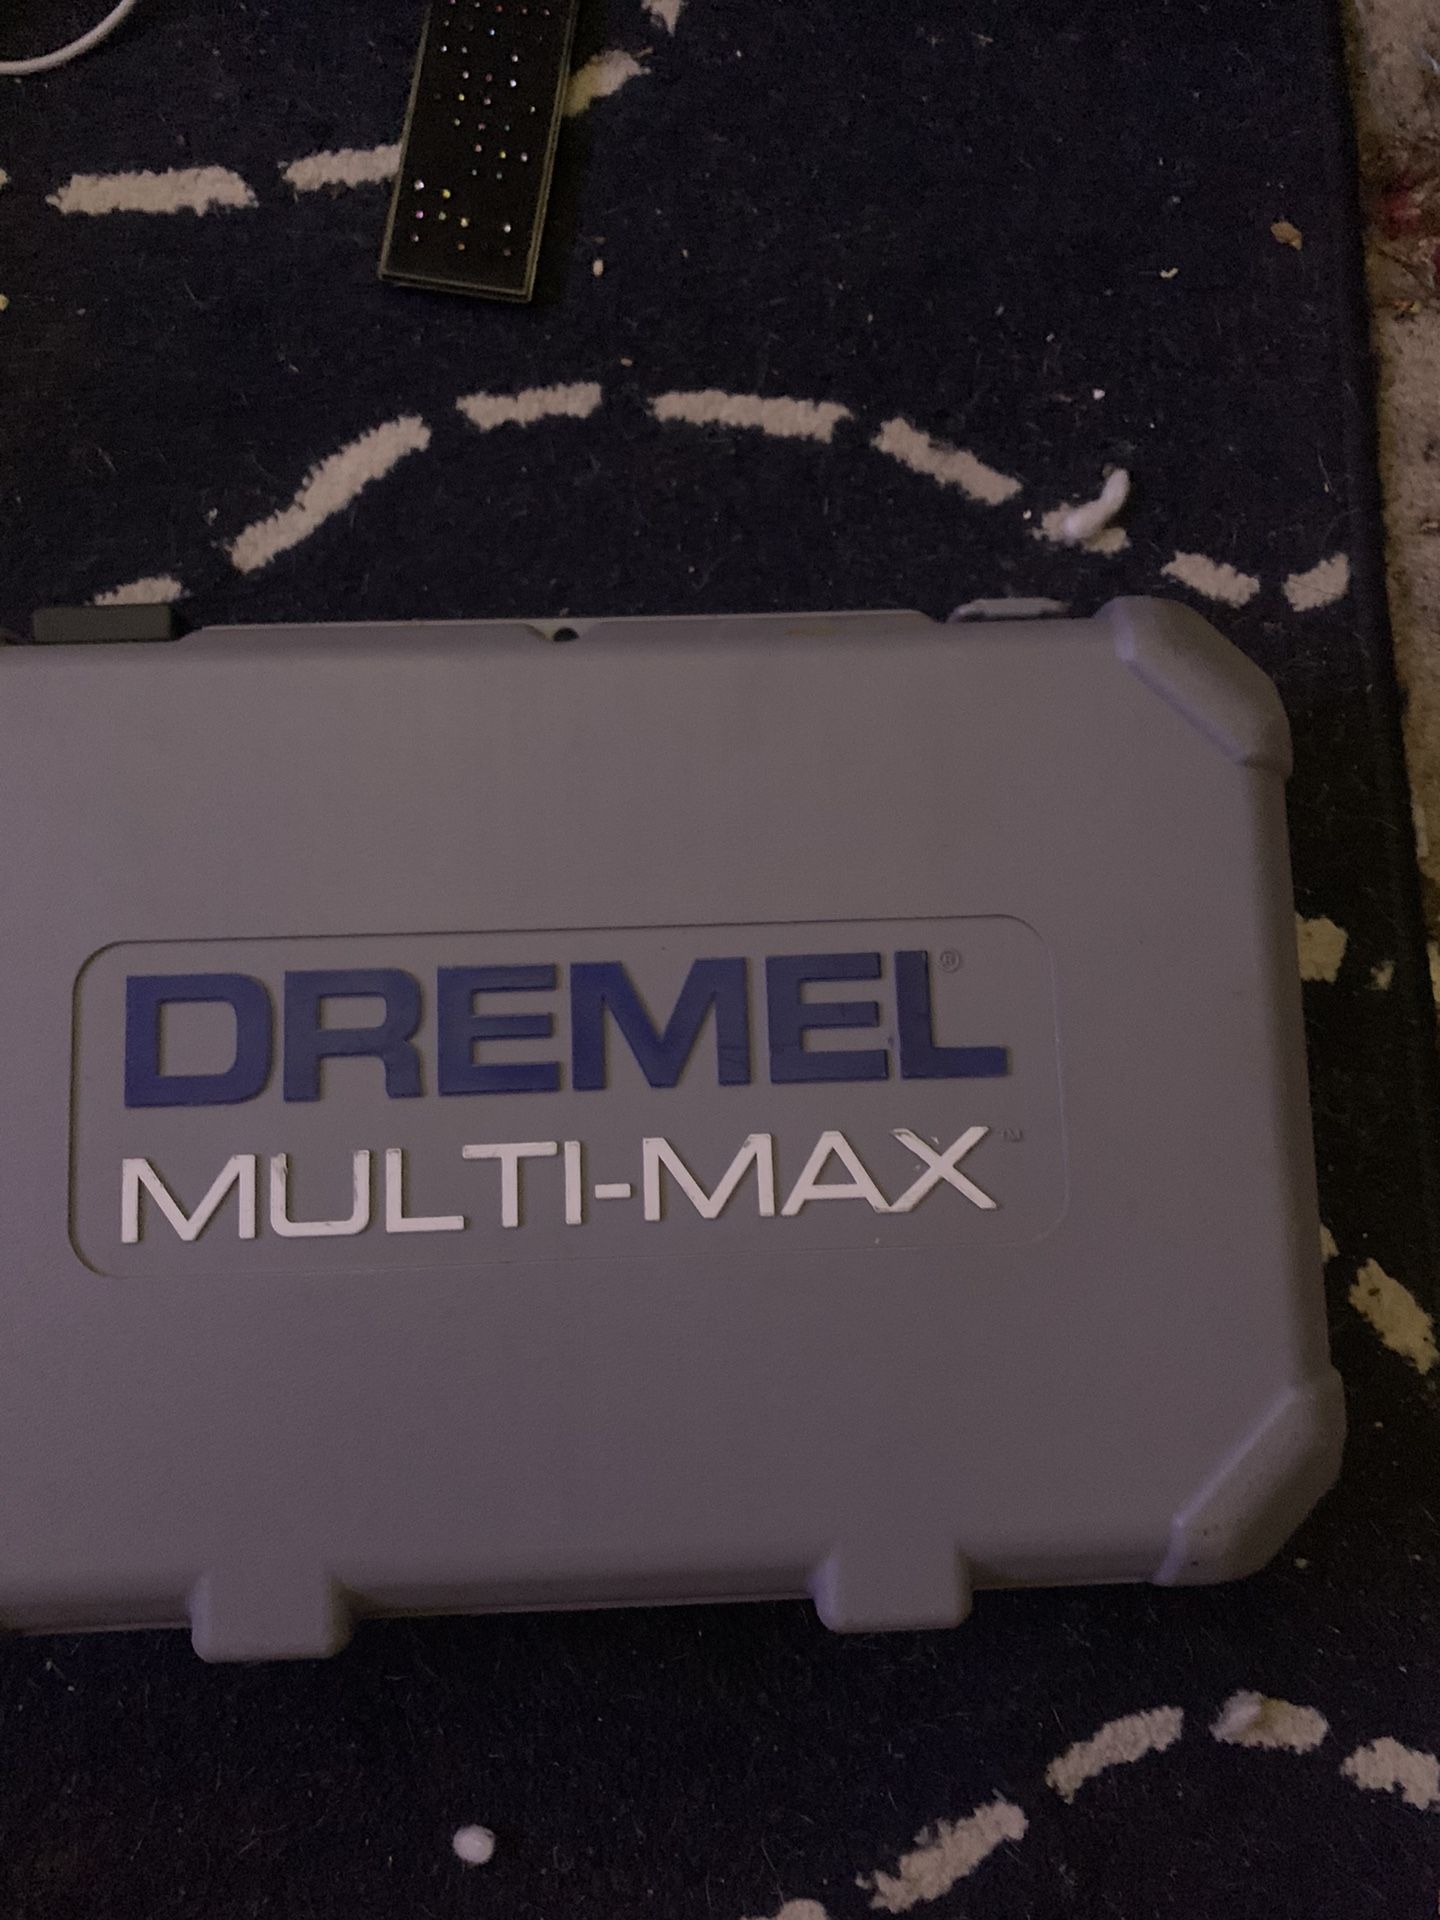 Dremel multi-max oscillating Saw 